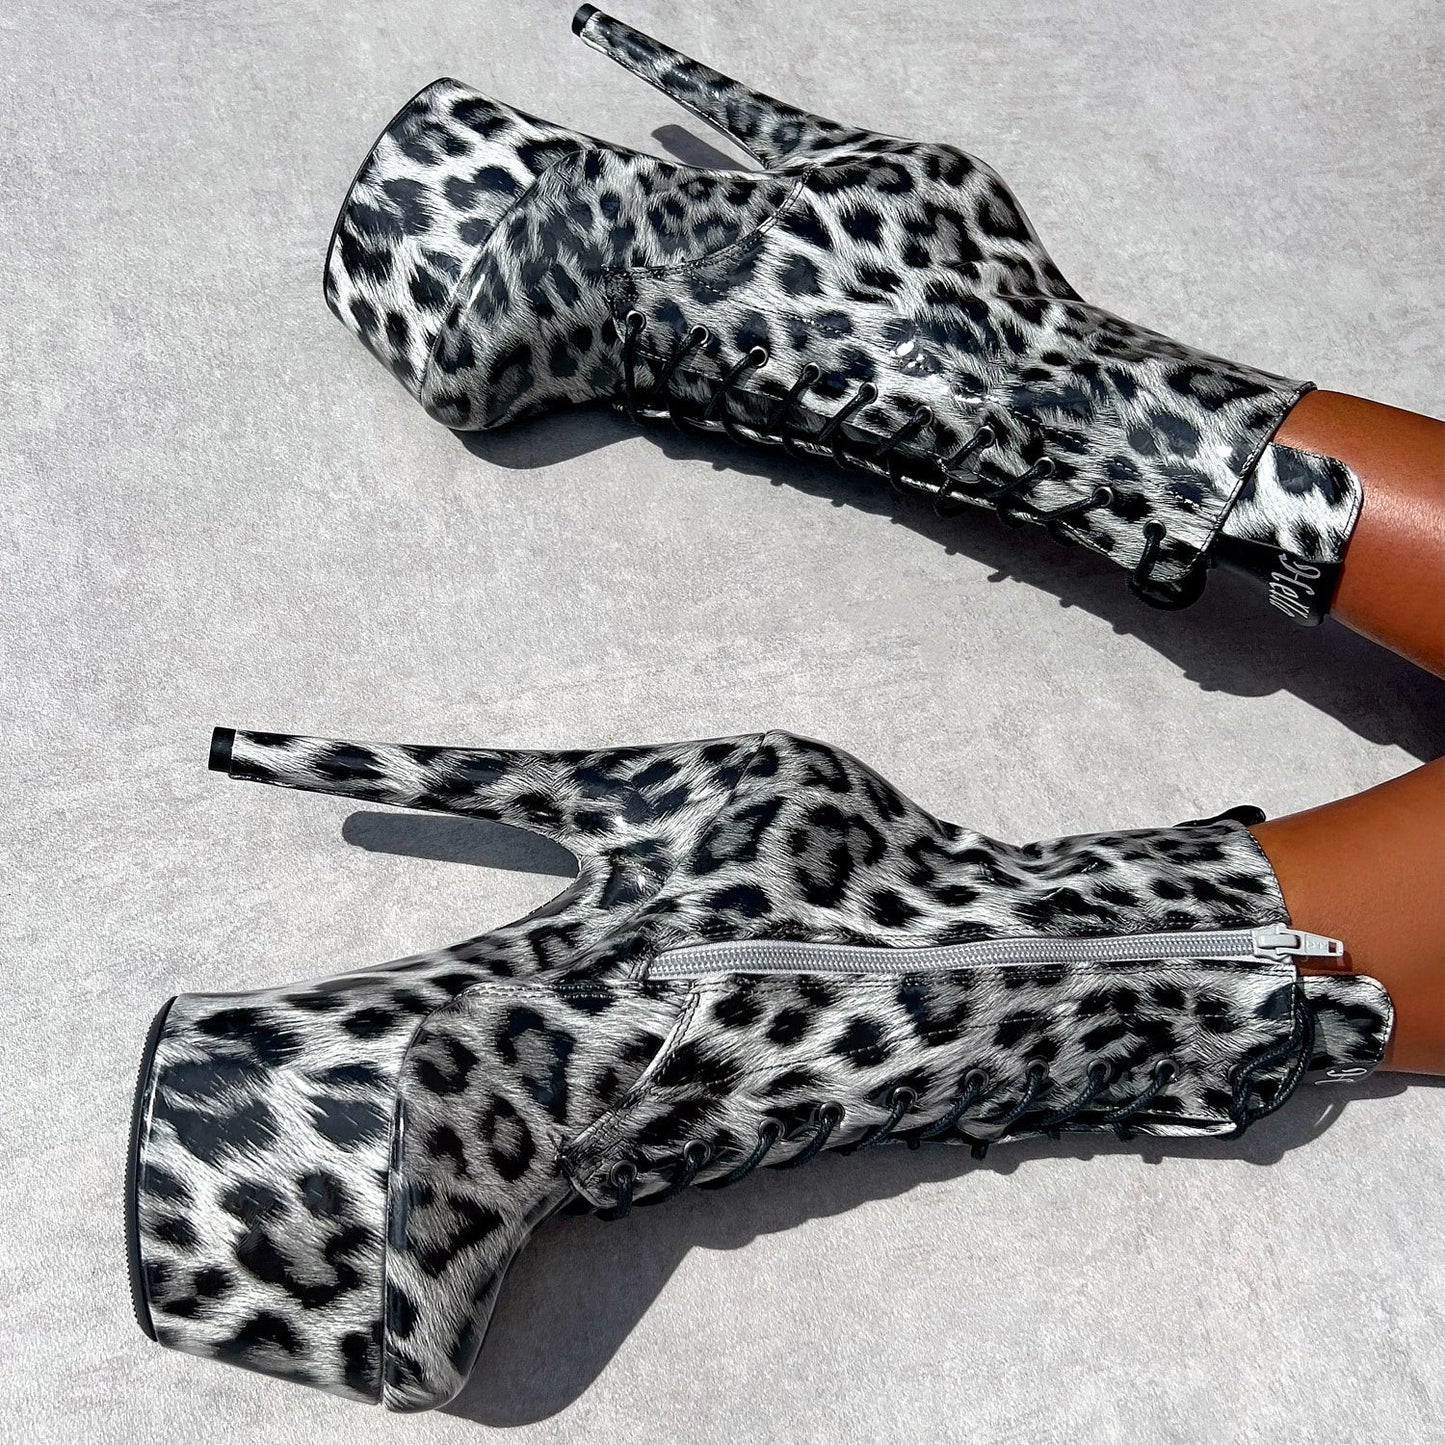 Snow Leopard Boot - 7 INCH, stripper shoe, stripper heel, pole heel, not a pleaser, platform, dancer, pole dance, floor work